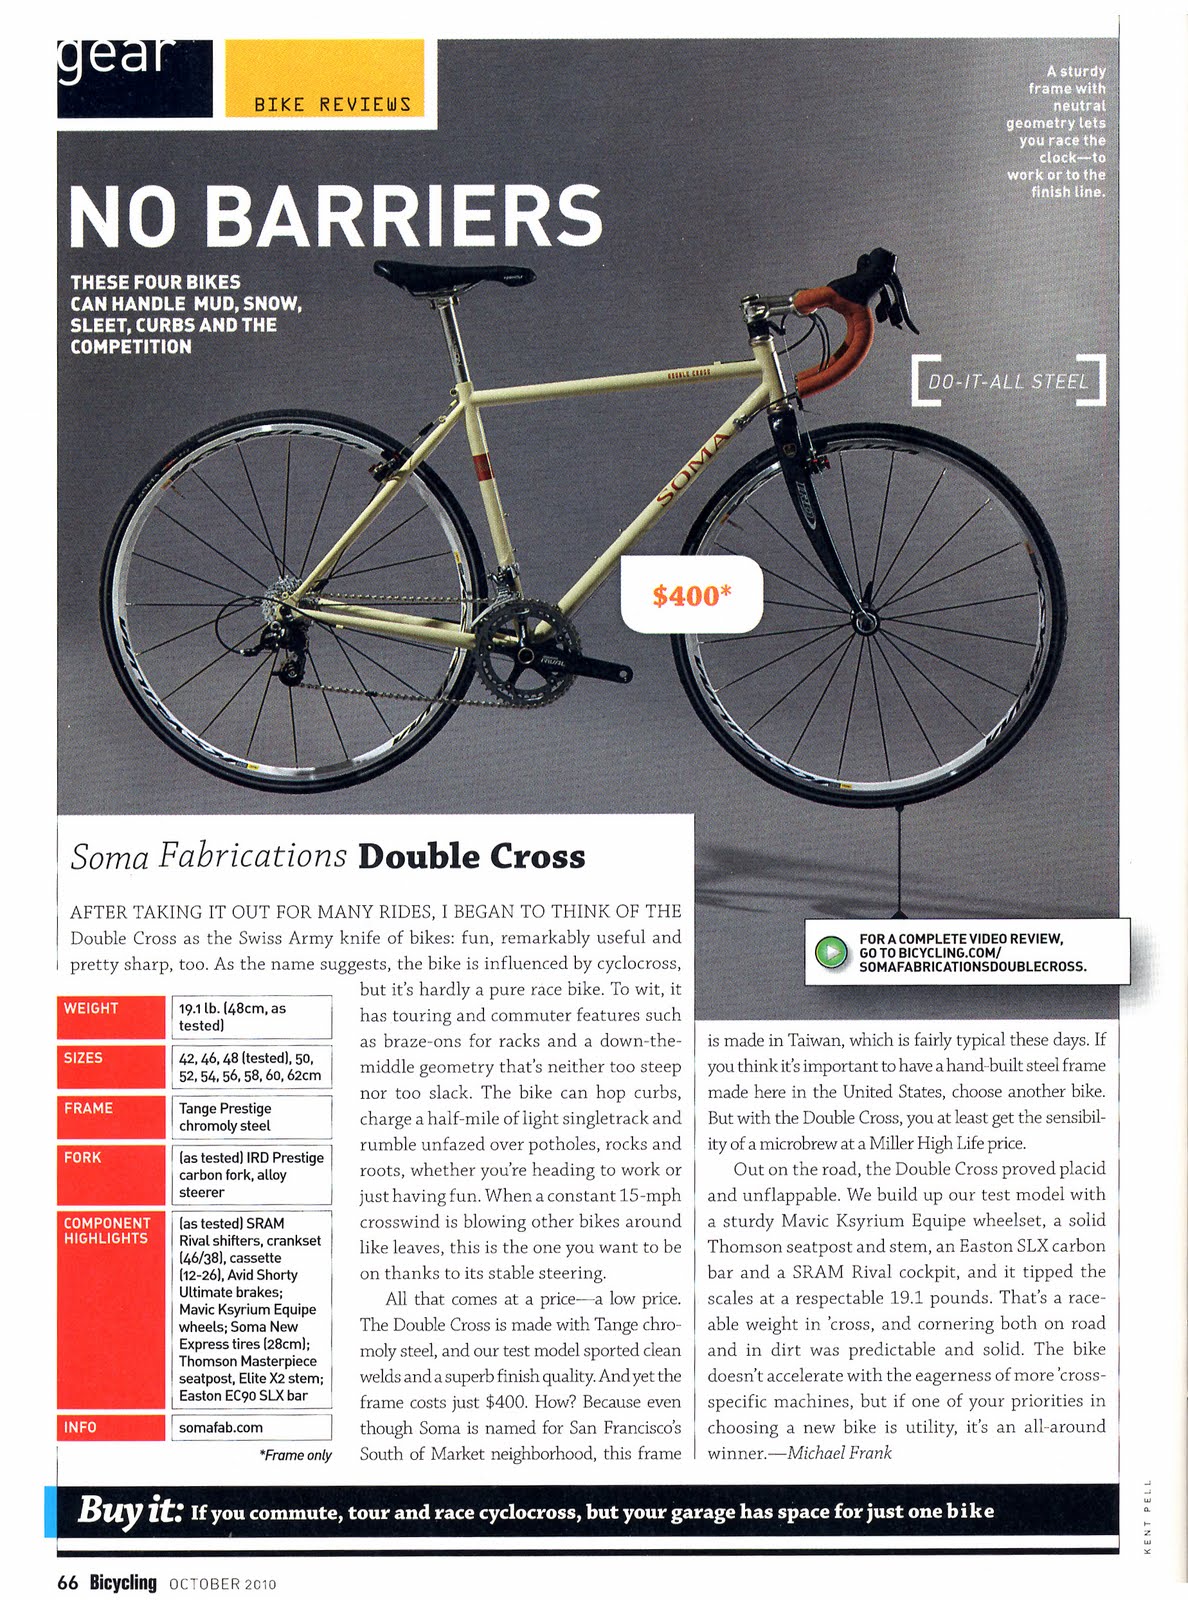 The Soma Fab Blog: Adventure Cyclist Reviews the Soma Jawbone B-Type  Bikepacking Frame